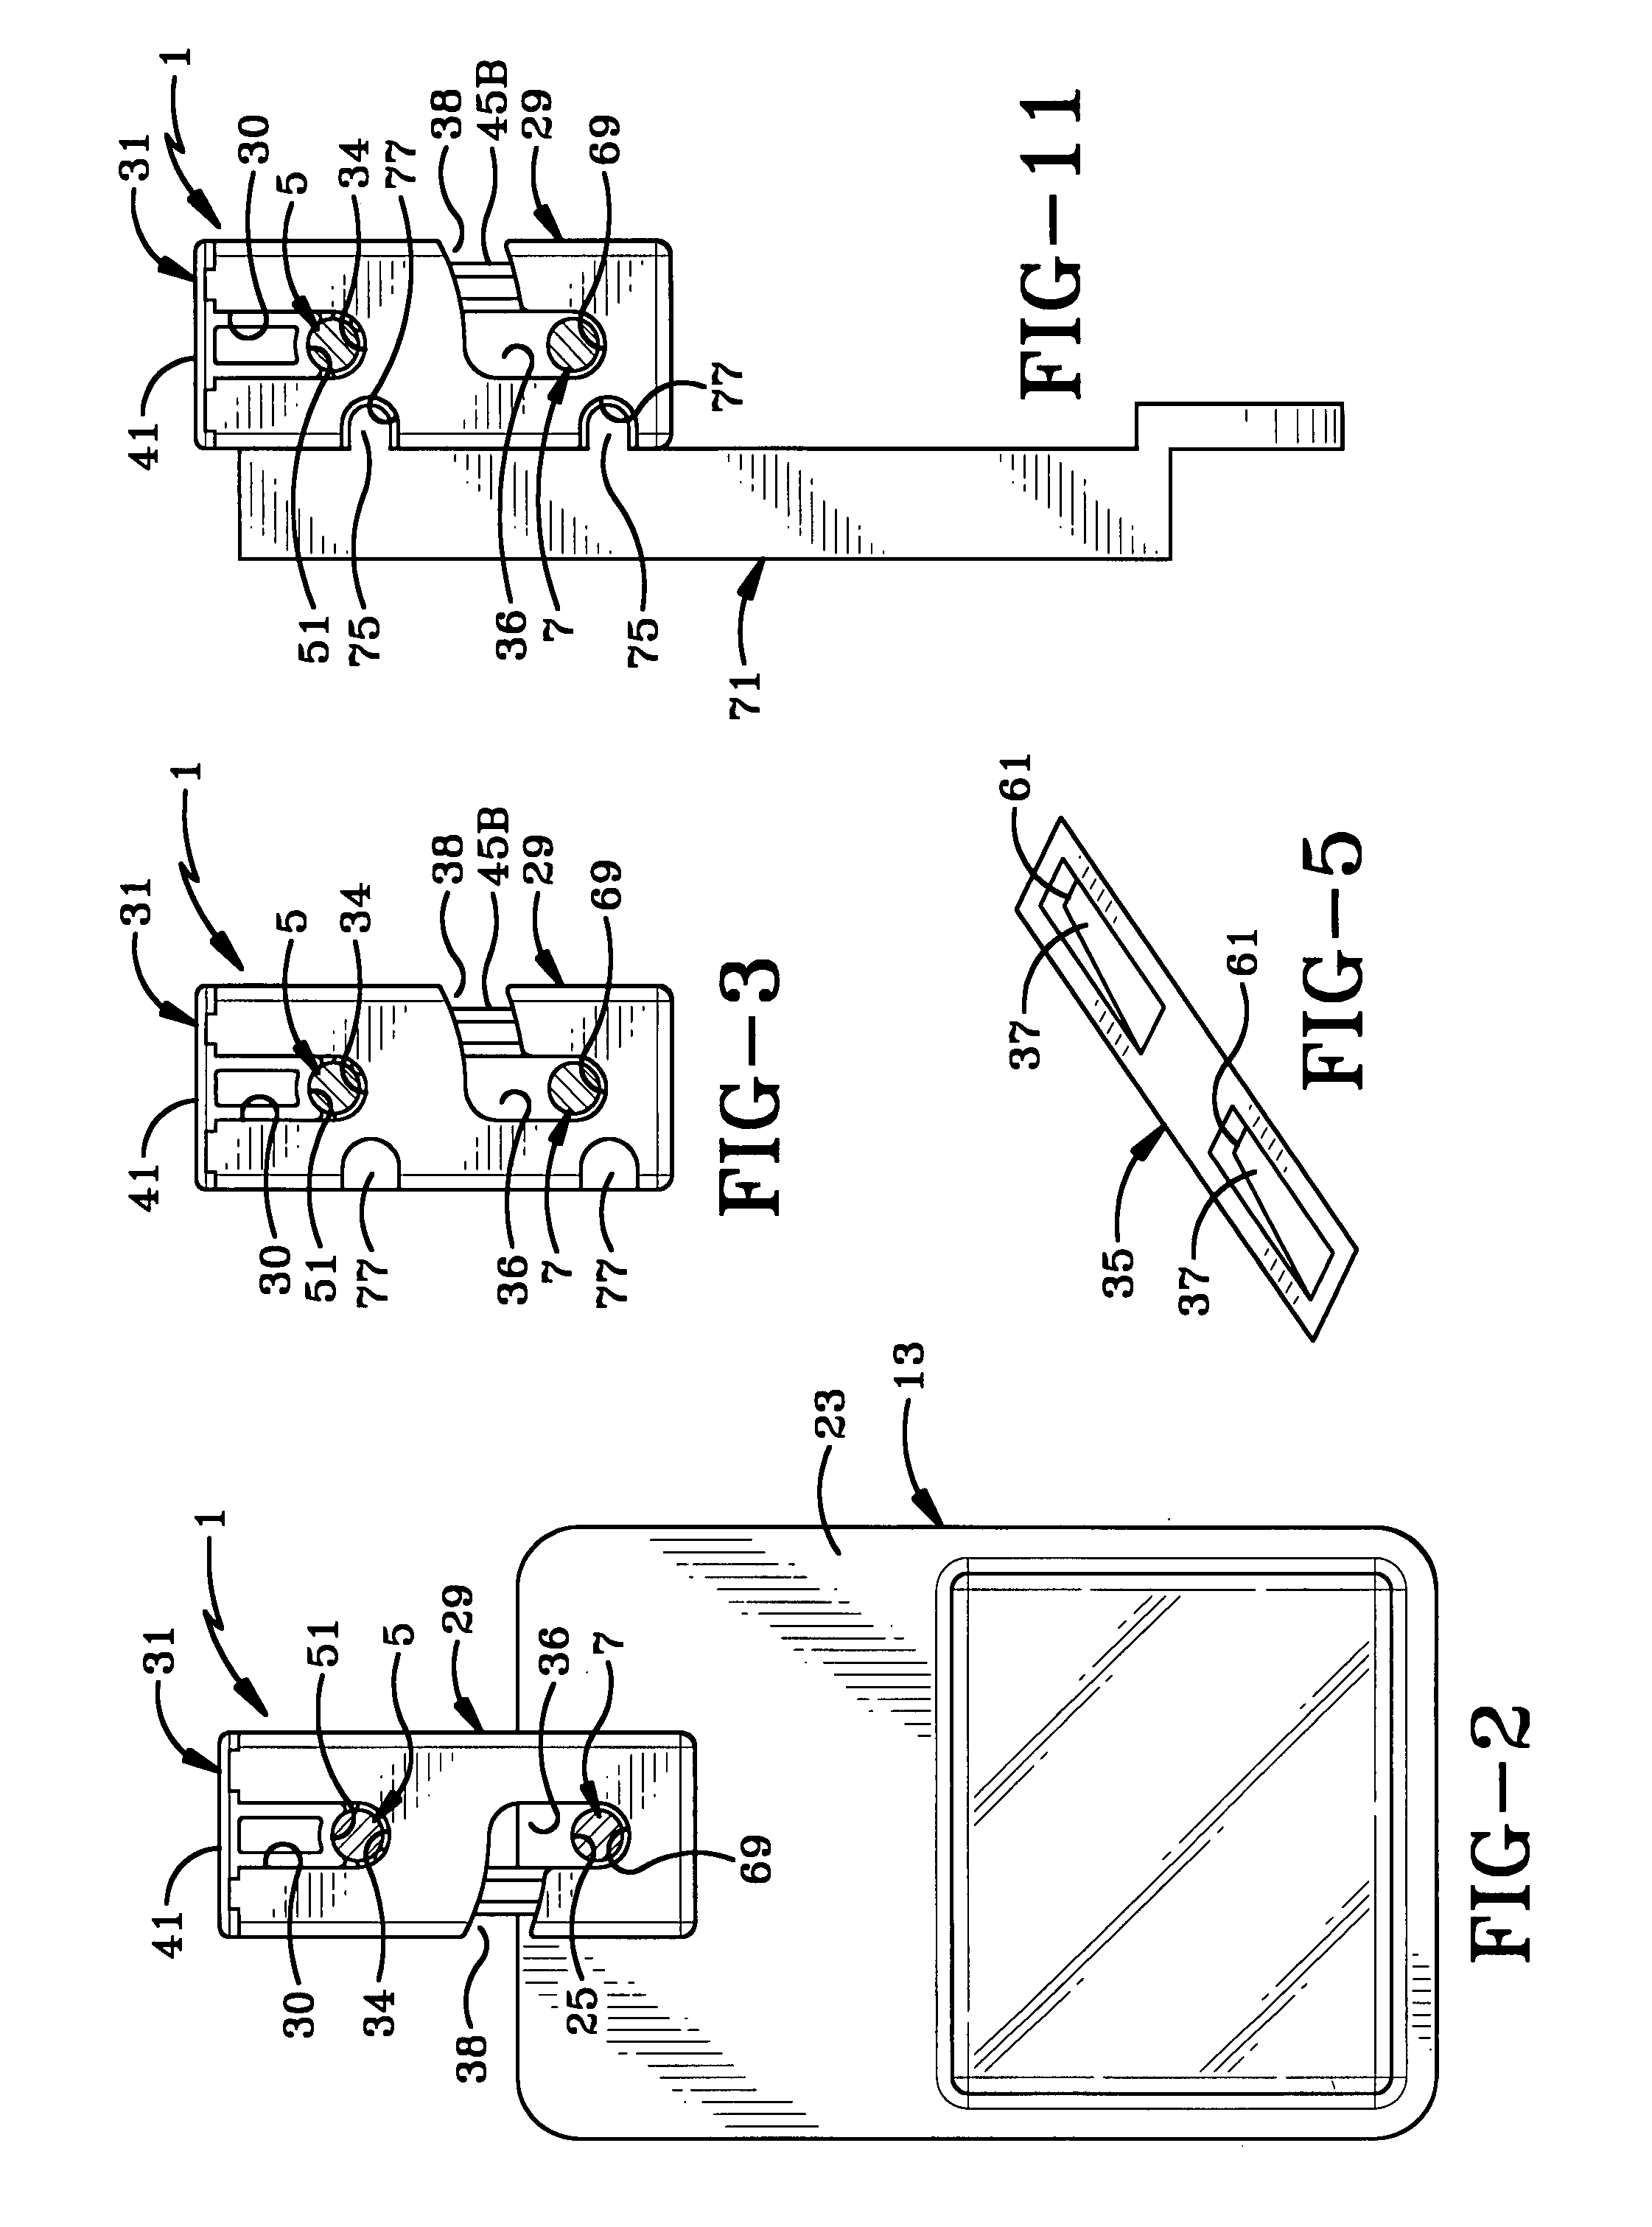 Lock mechanism for display rod